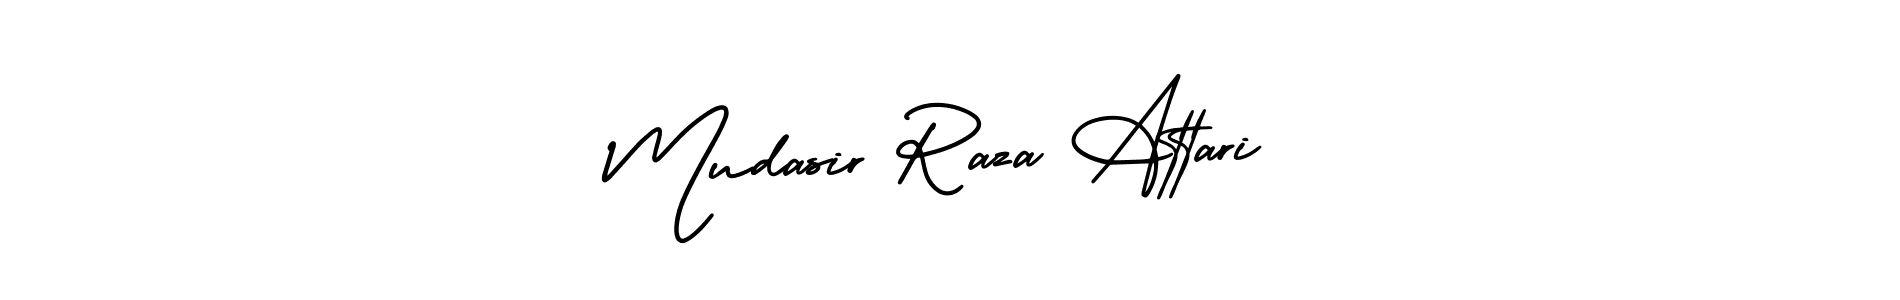 Best and Professional Signature Style for Mudasir Raza Attari. AmerikaSignatureDemo-Regular Best Signature Style Collection. Mudasir Raza Attari signature style 3 images and pictures png